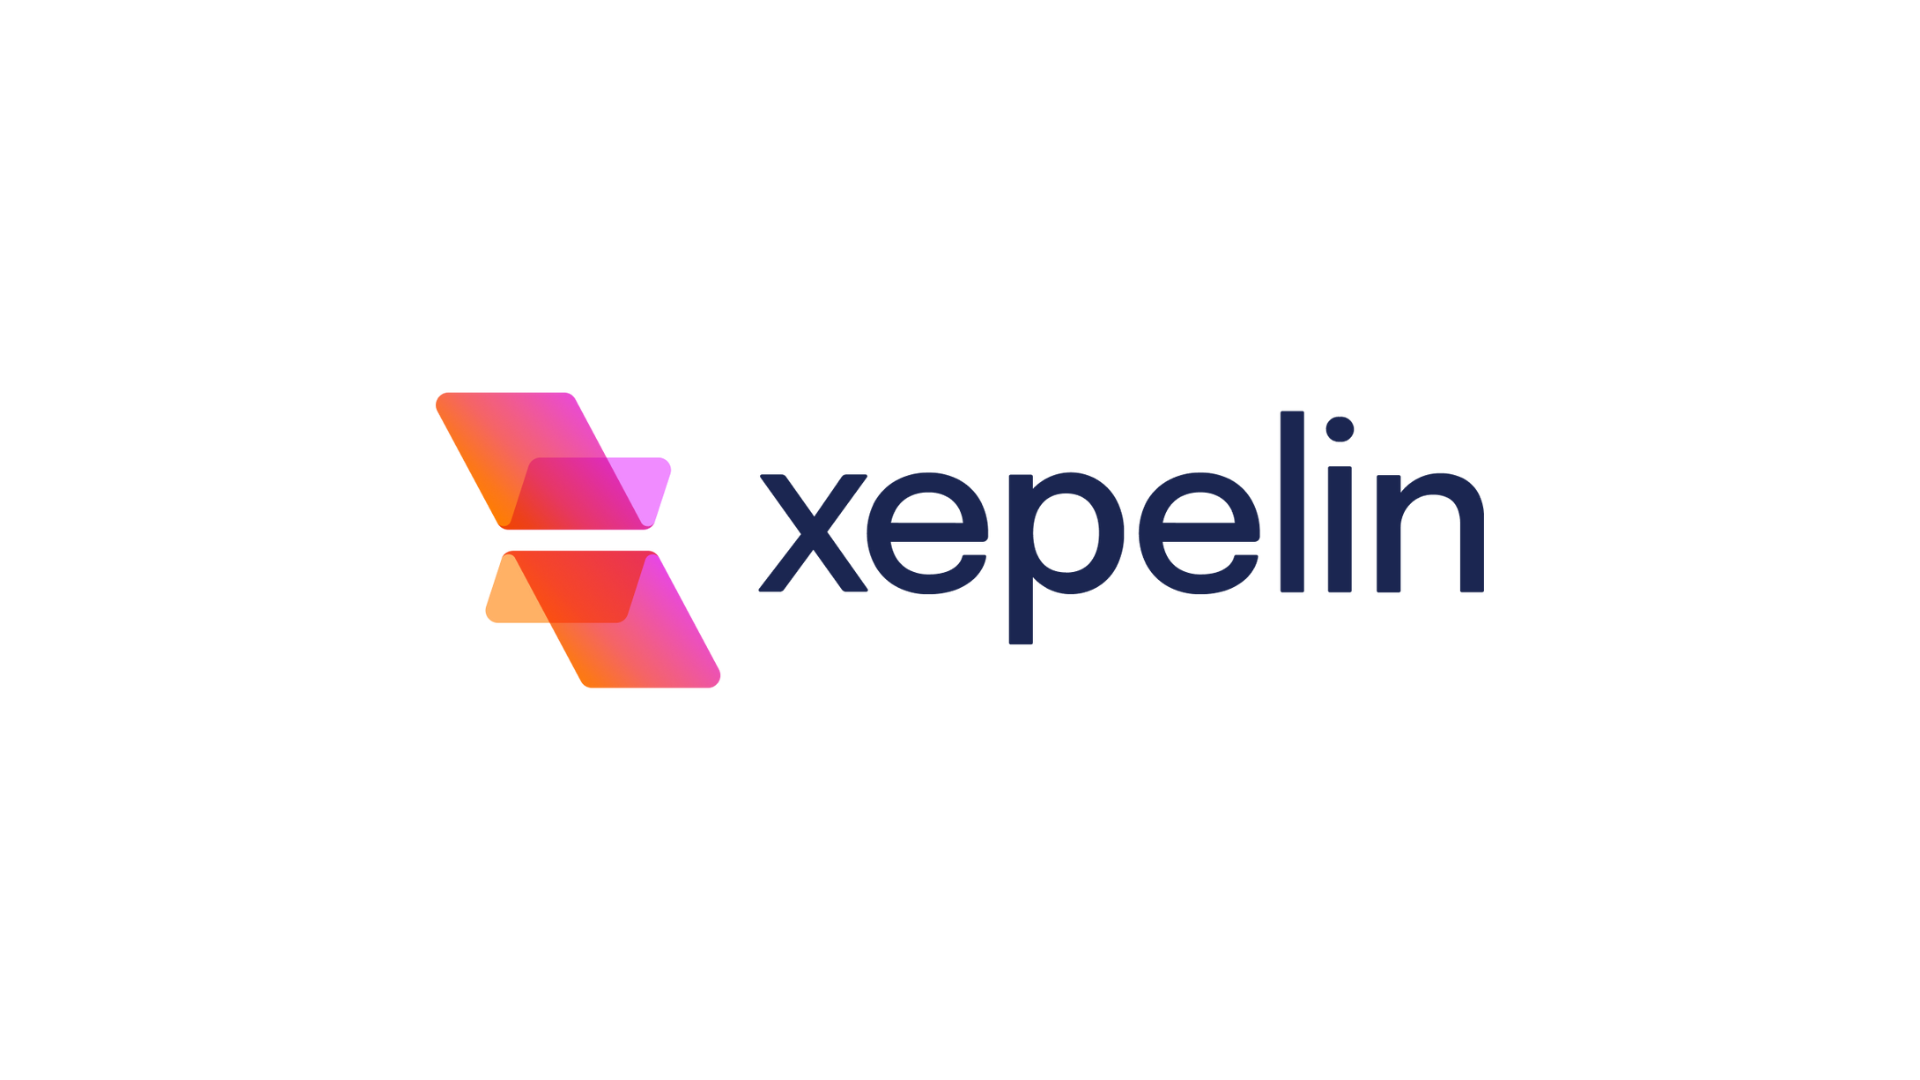 Integra Xepelin con Nubox